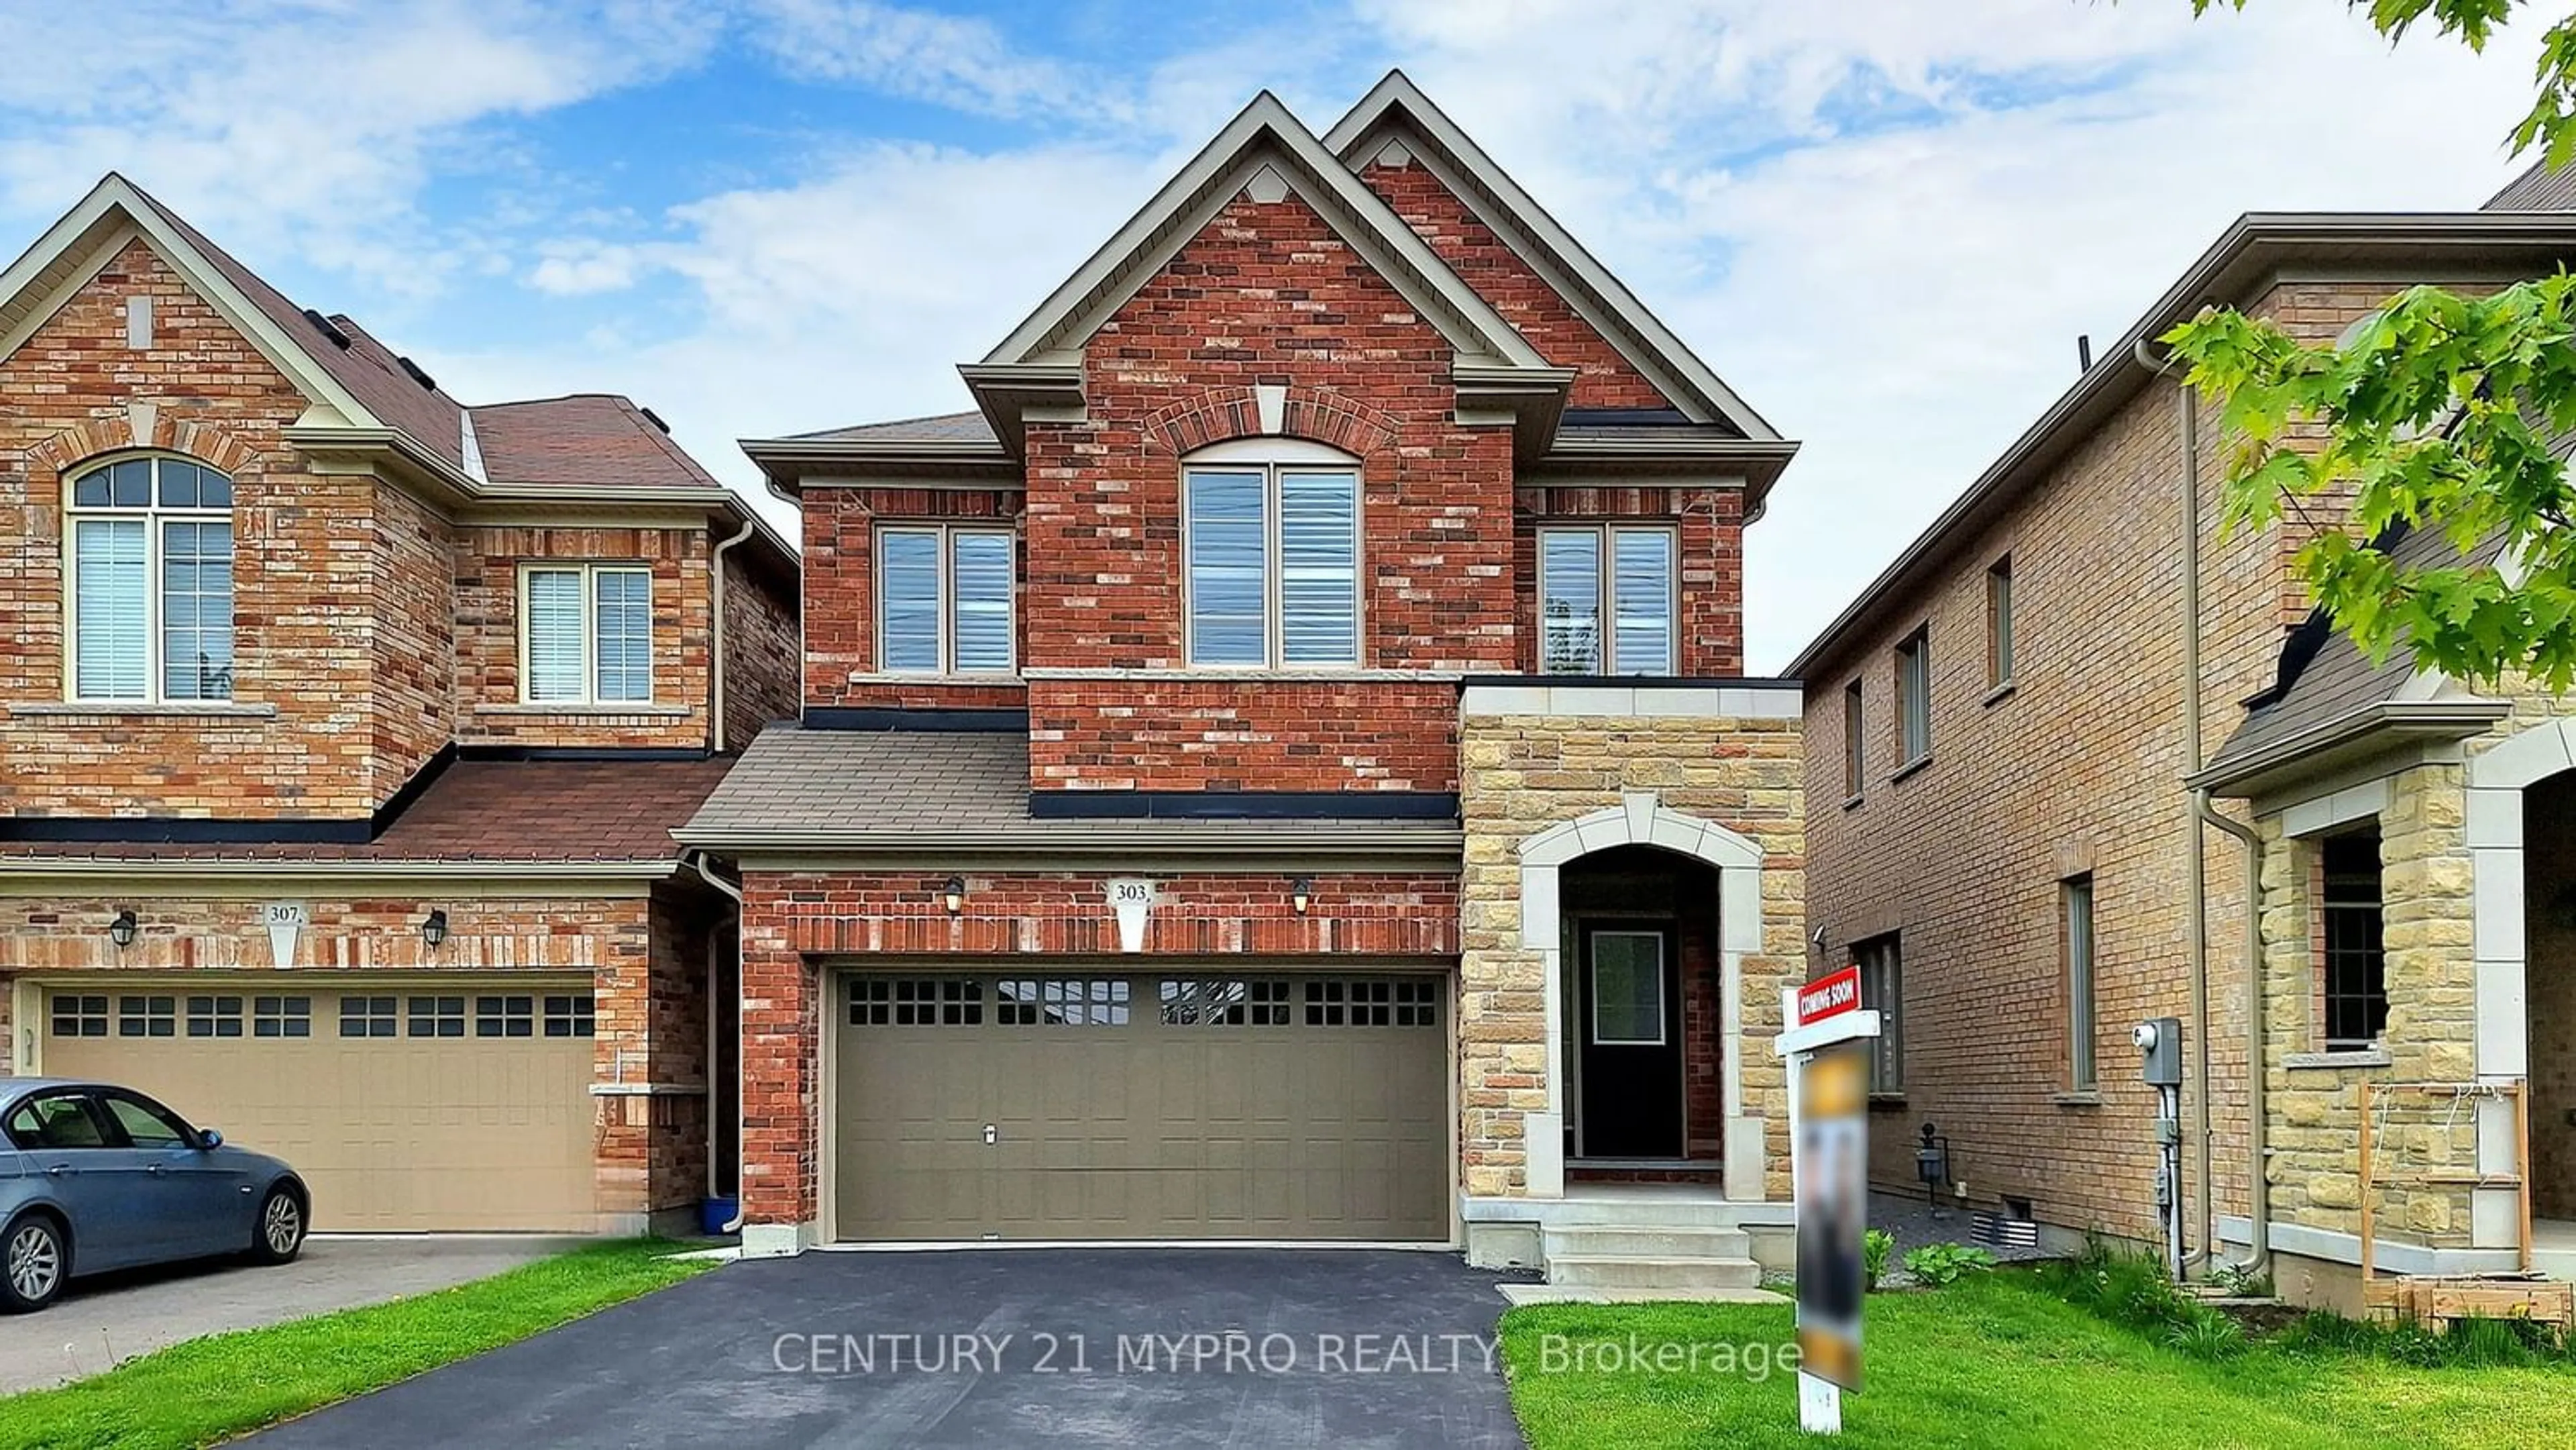 Home with brick exterior material for 303 Chouinard Way, Aurora Ontario L4G 1A6